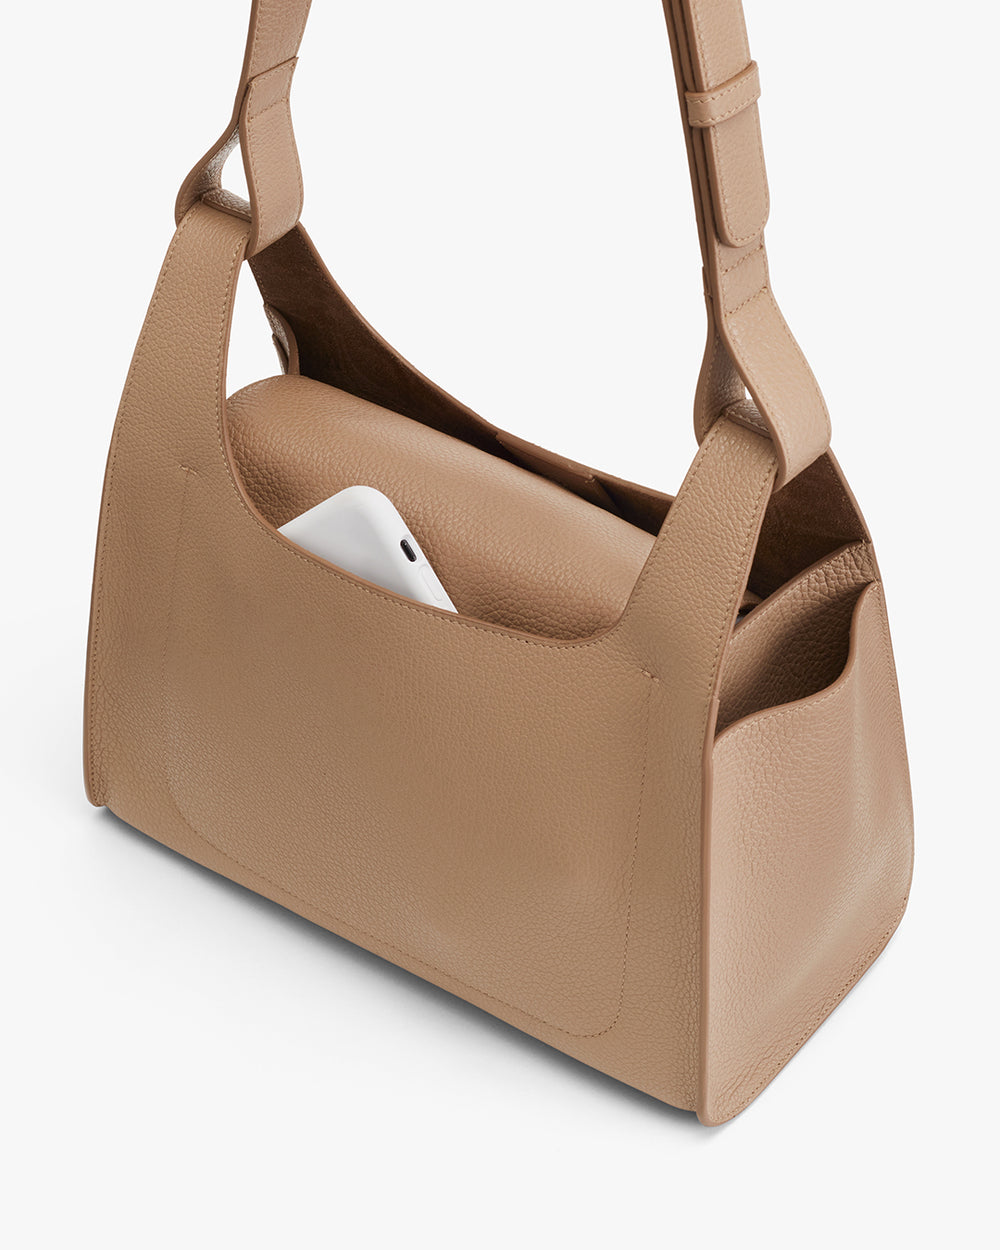 Handbag with a laptop inside on a plain background.